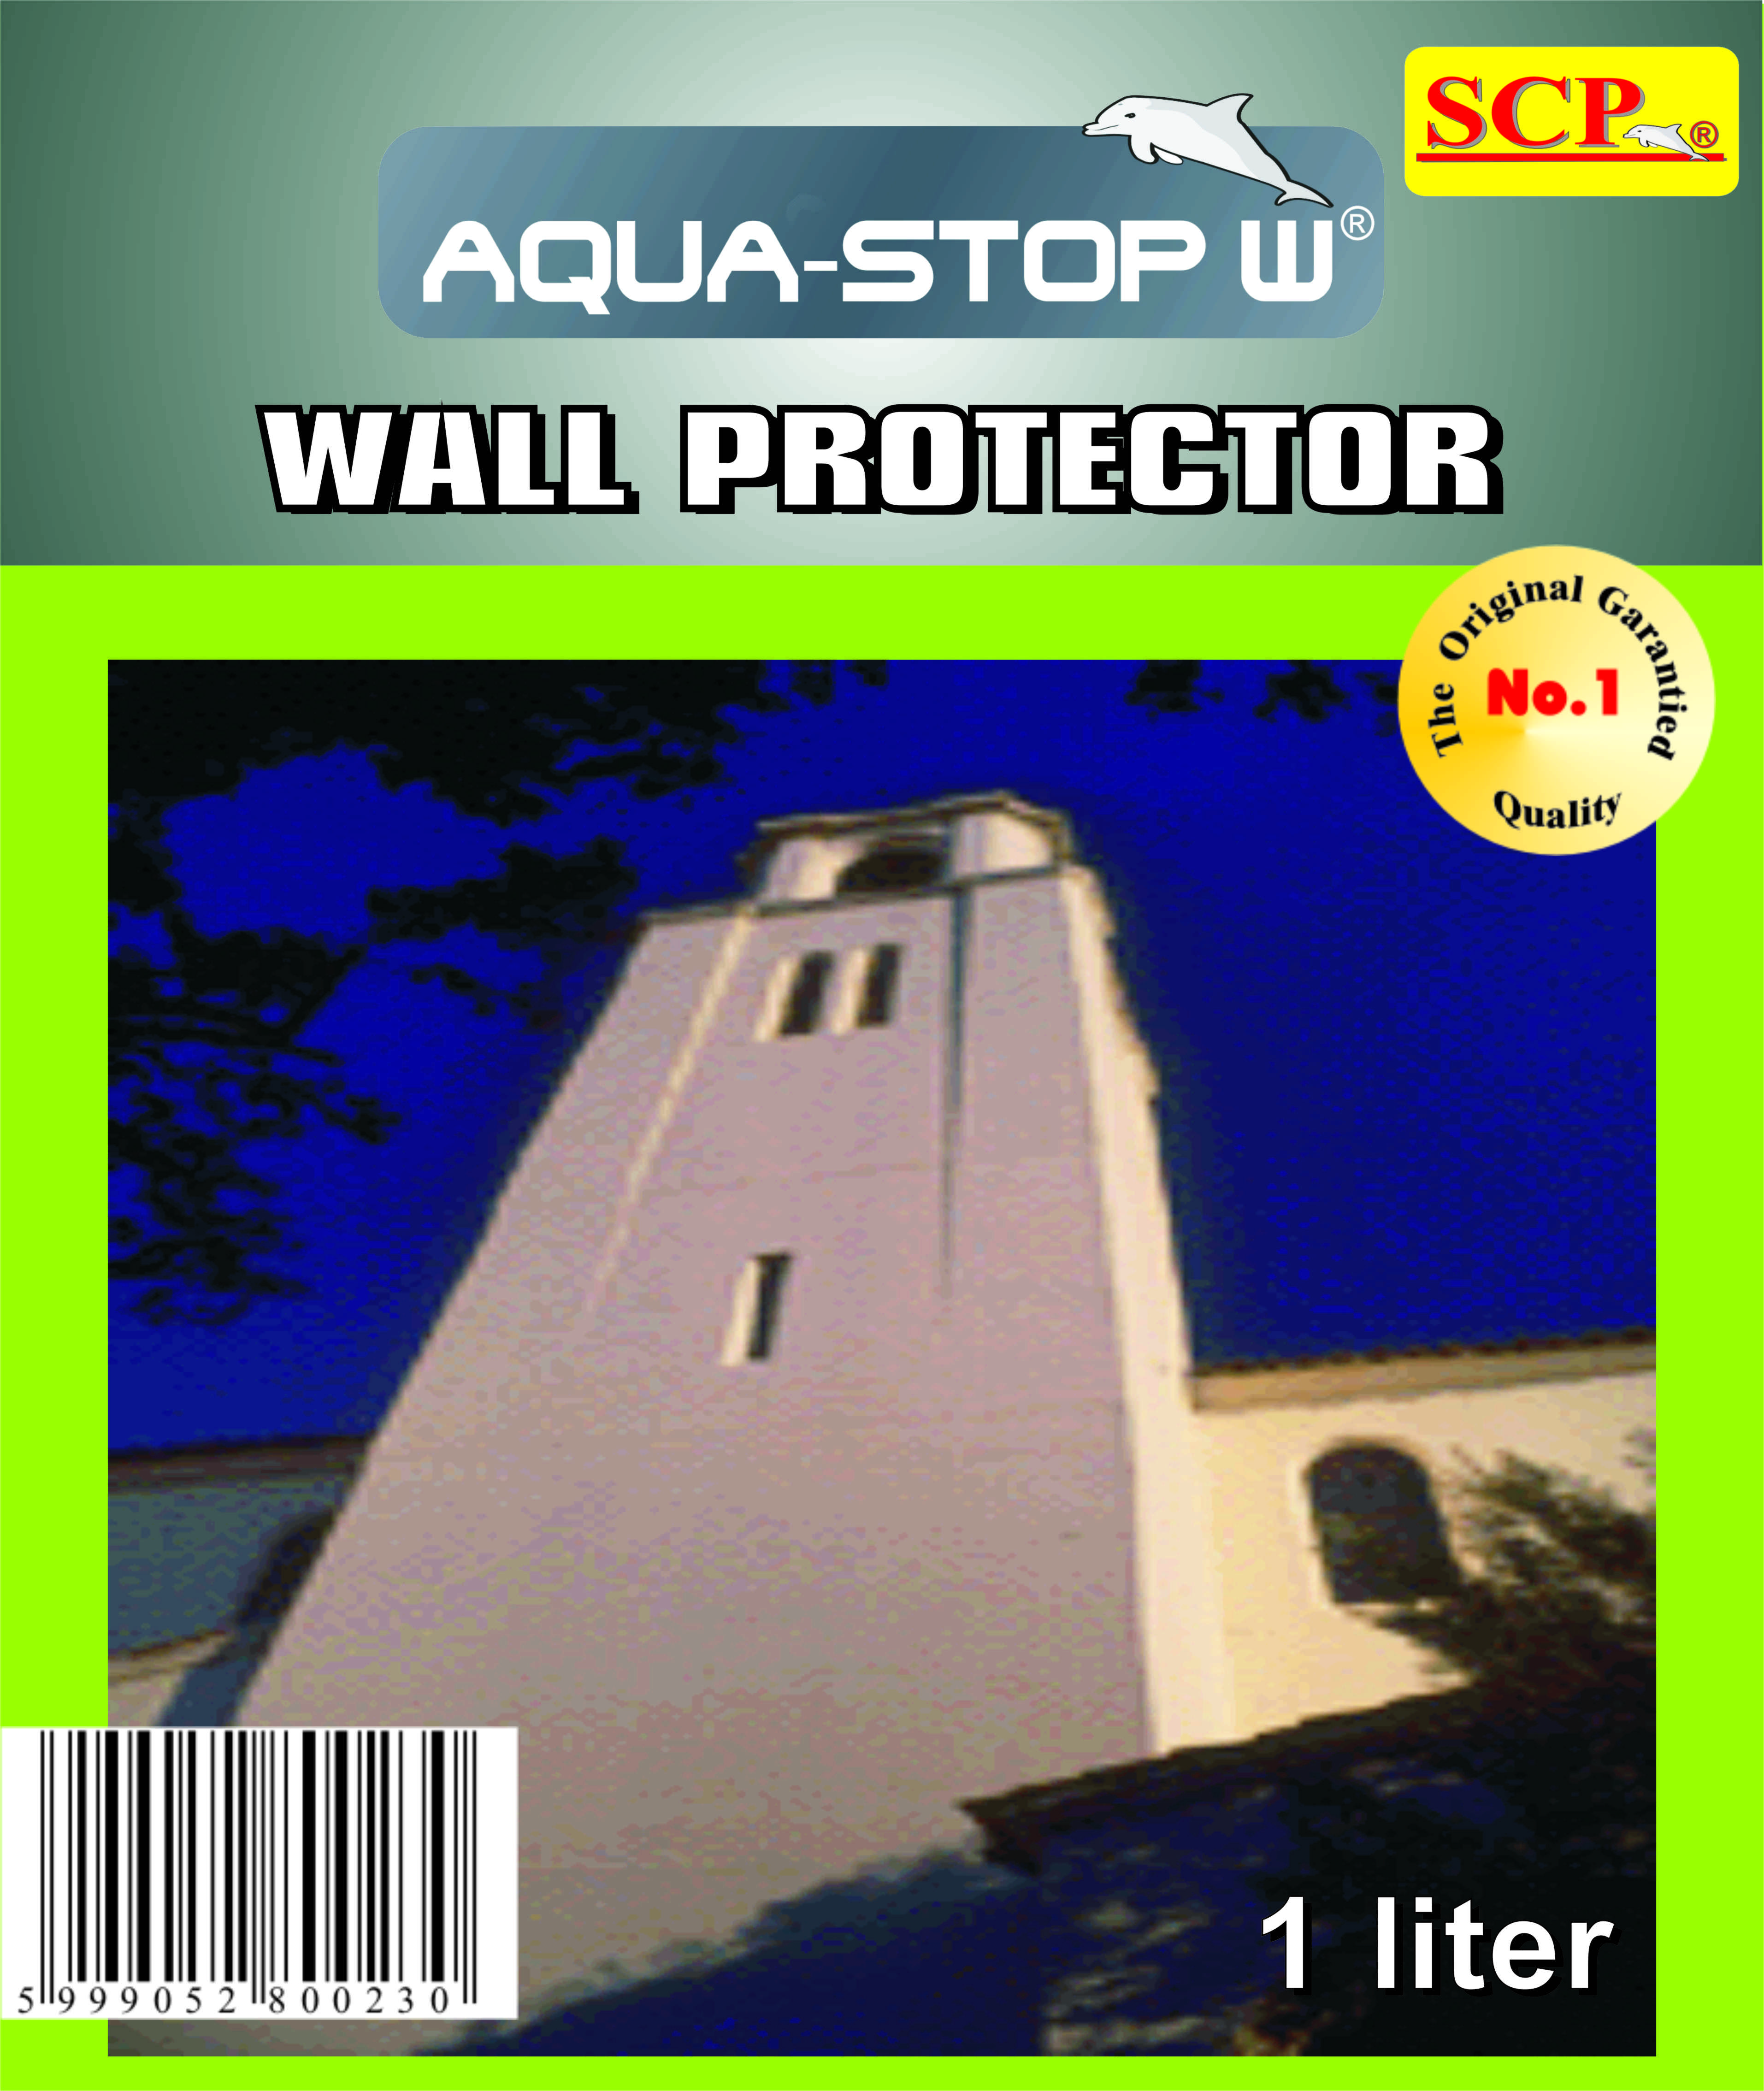 Wall Protector